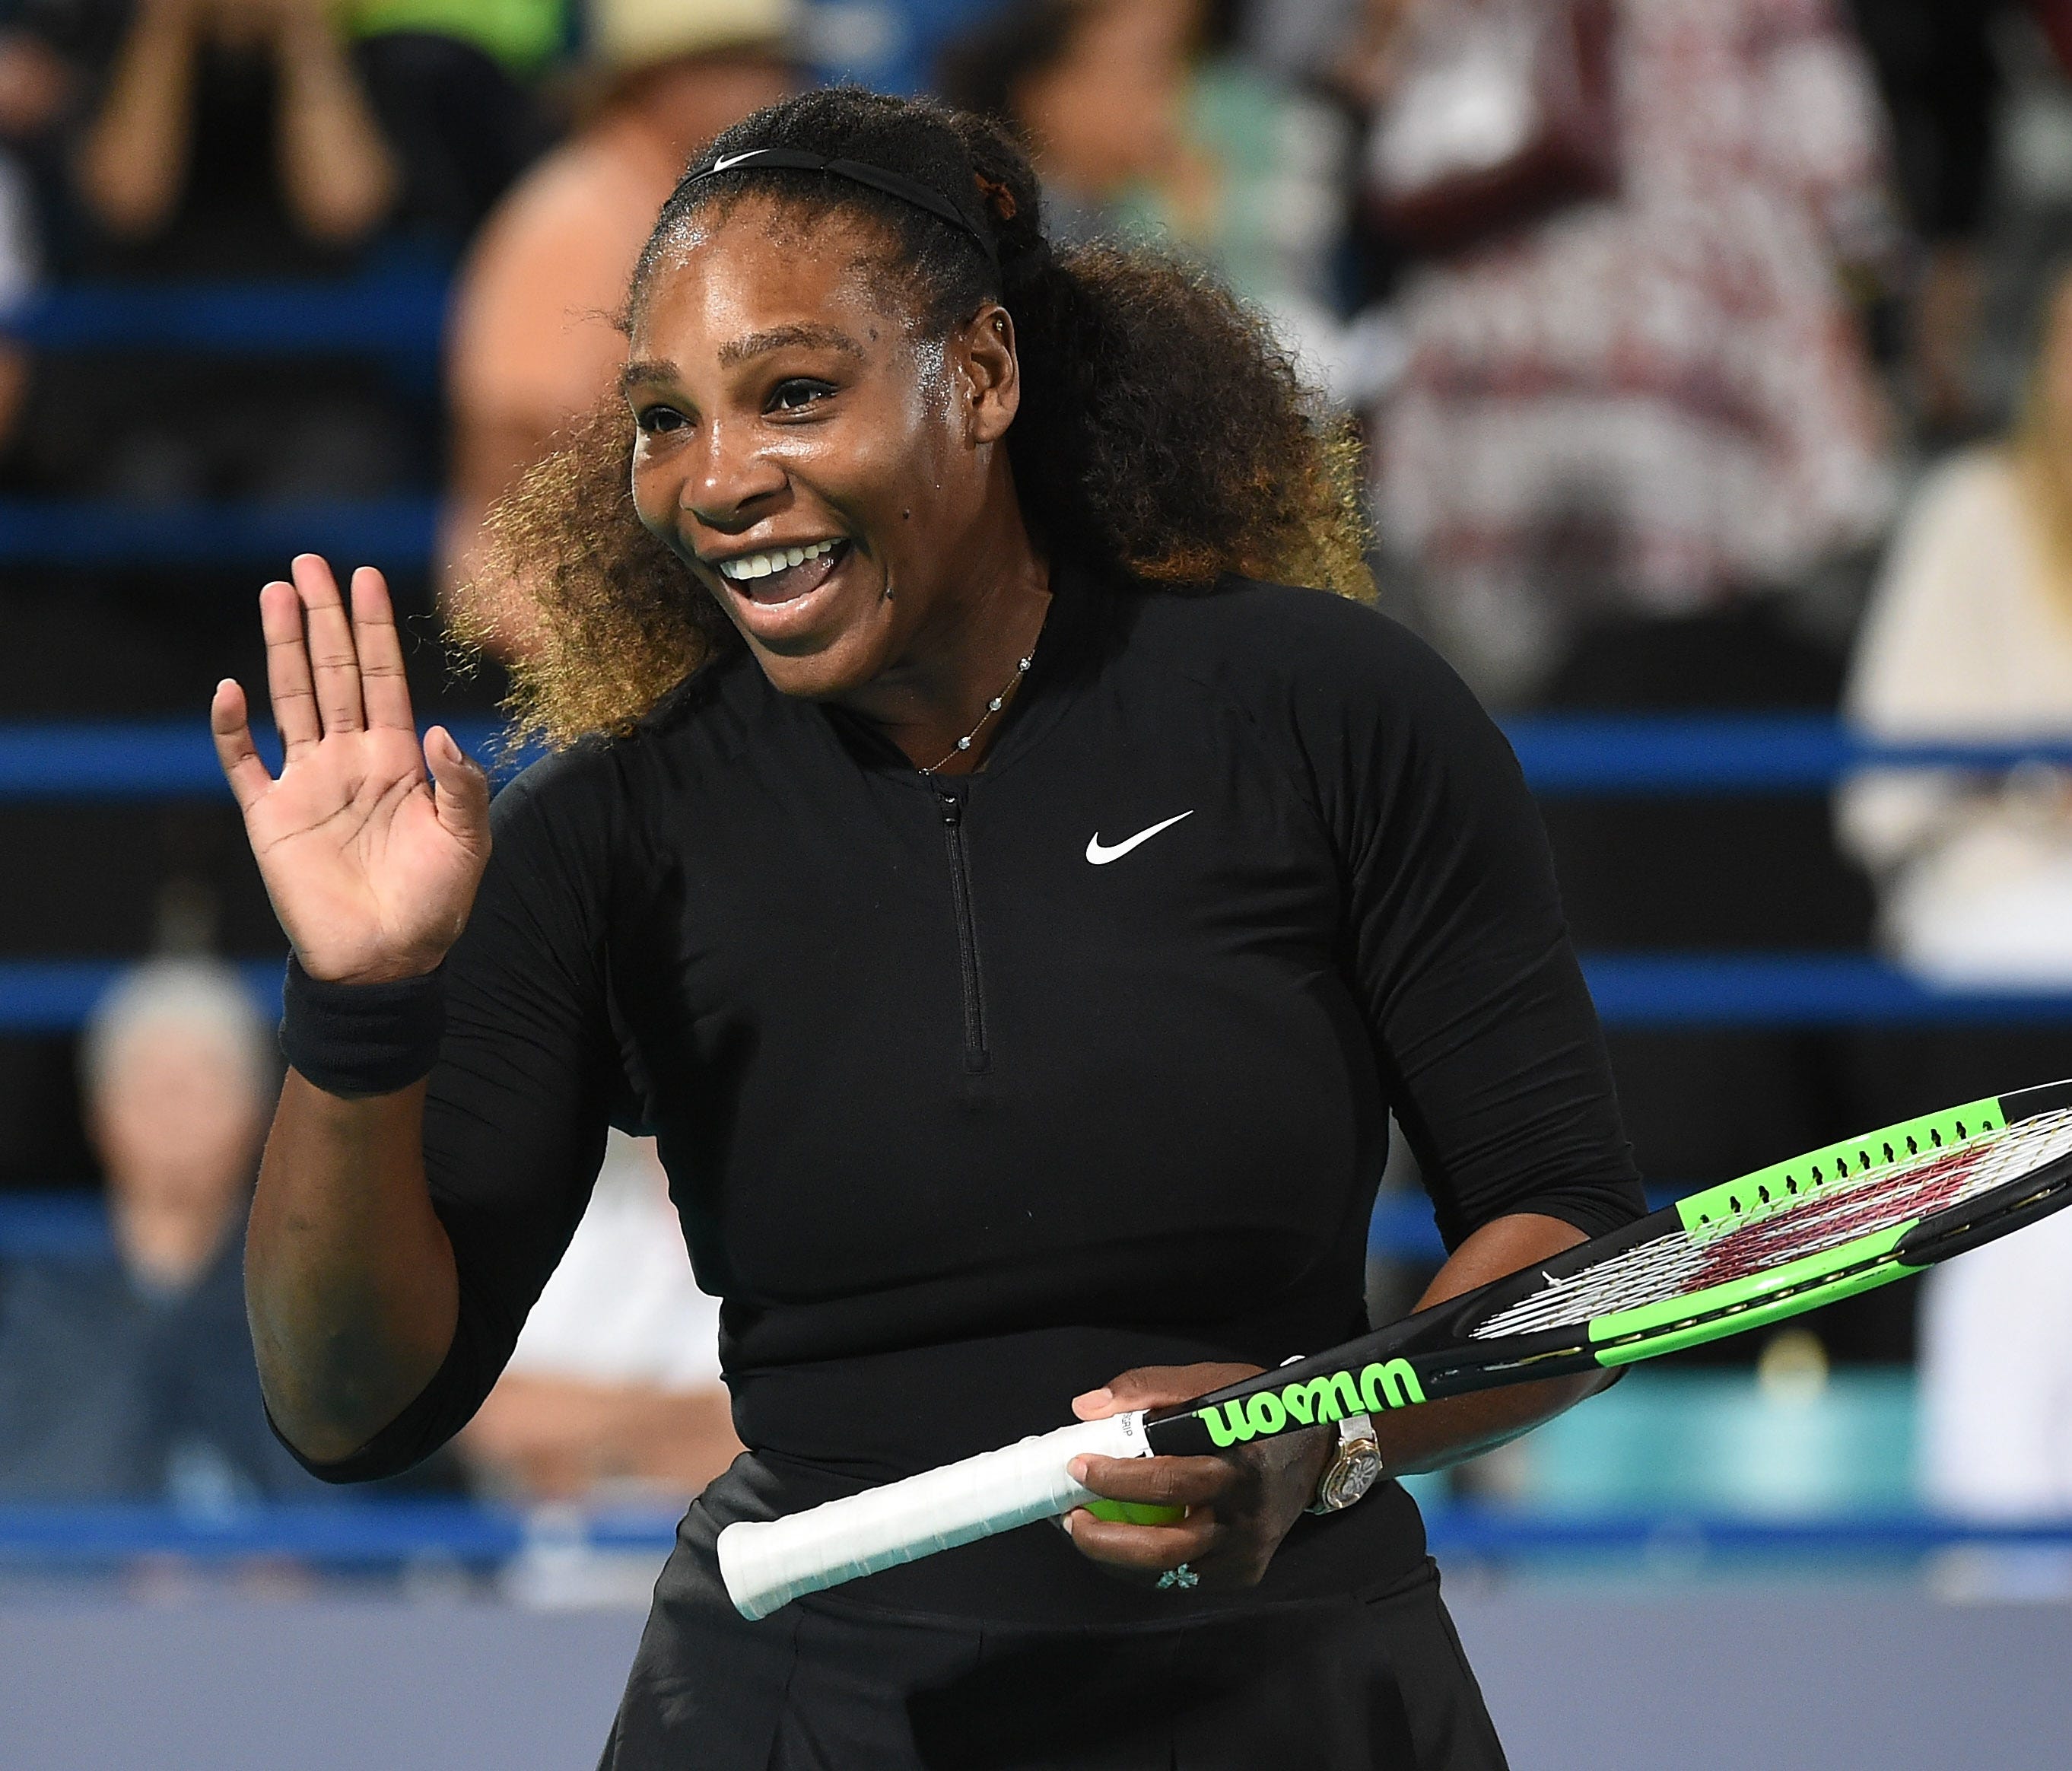 Serena Williams during her match against Jelena Ostapenko in Abu Dhabi.